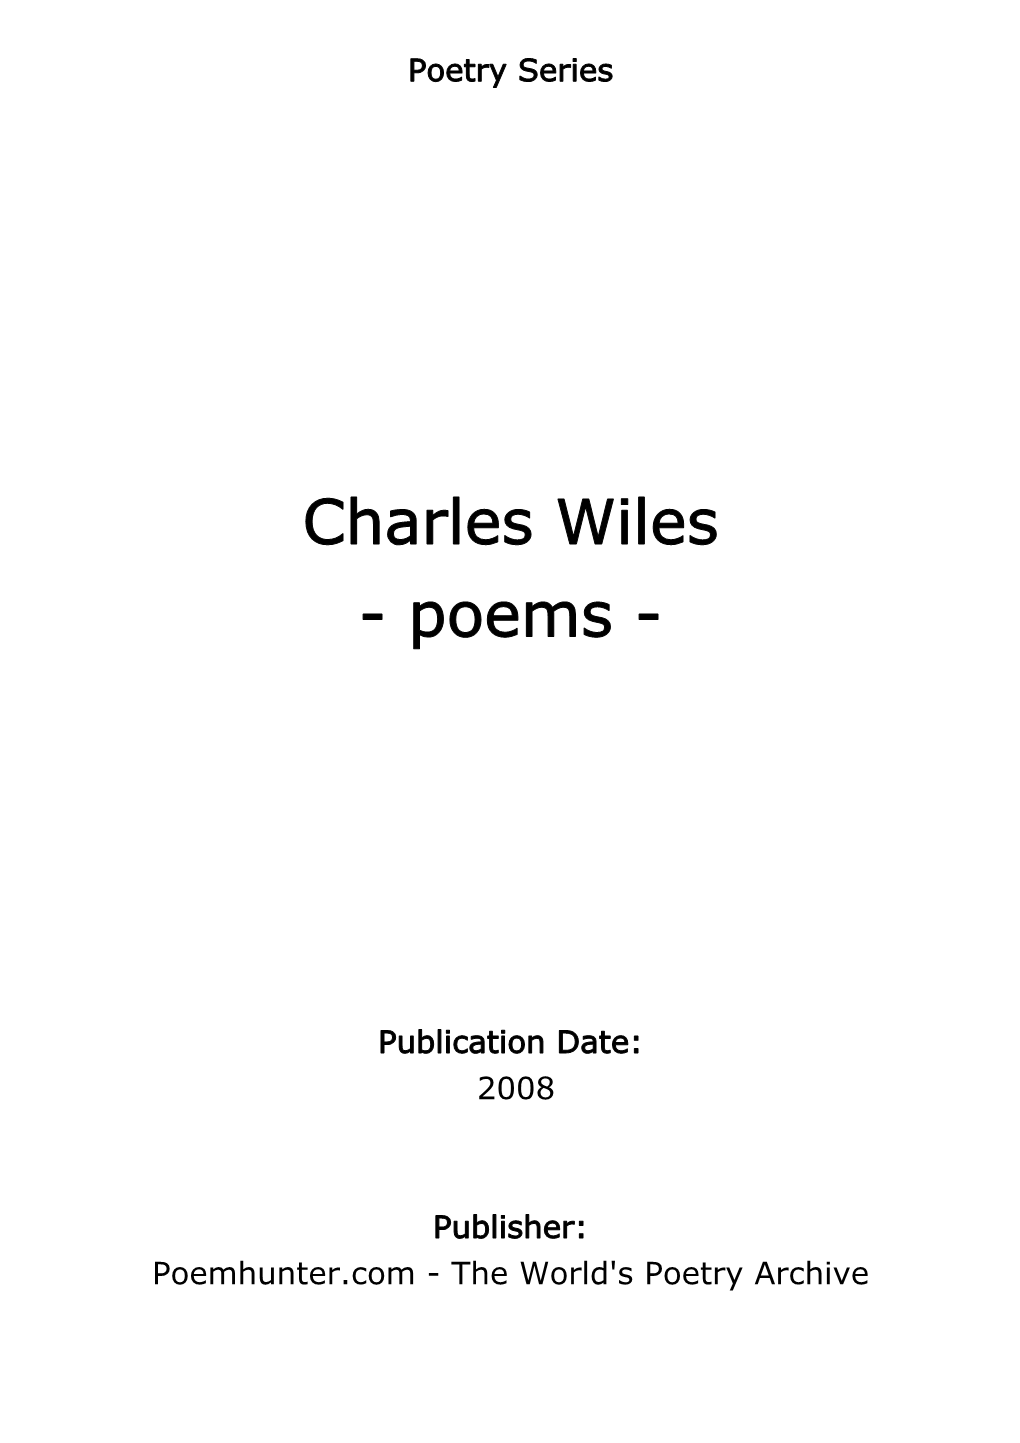 Charles Wiles - Poems